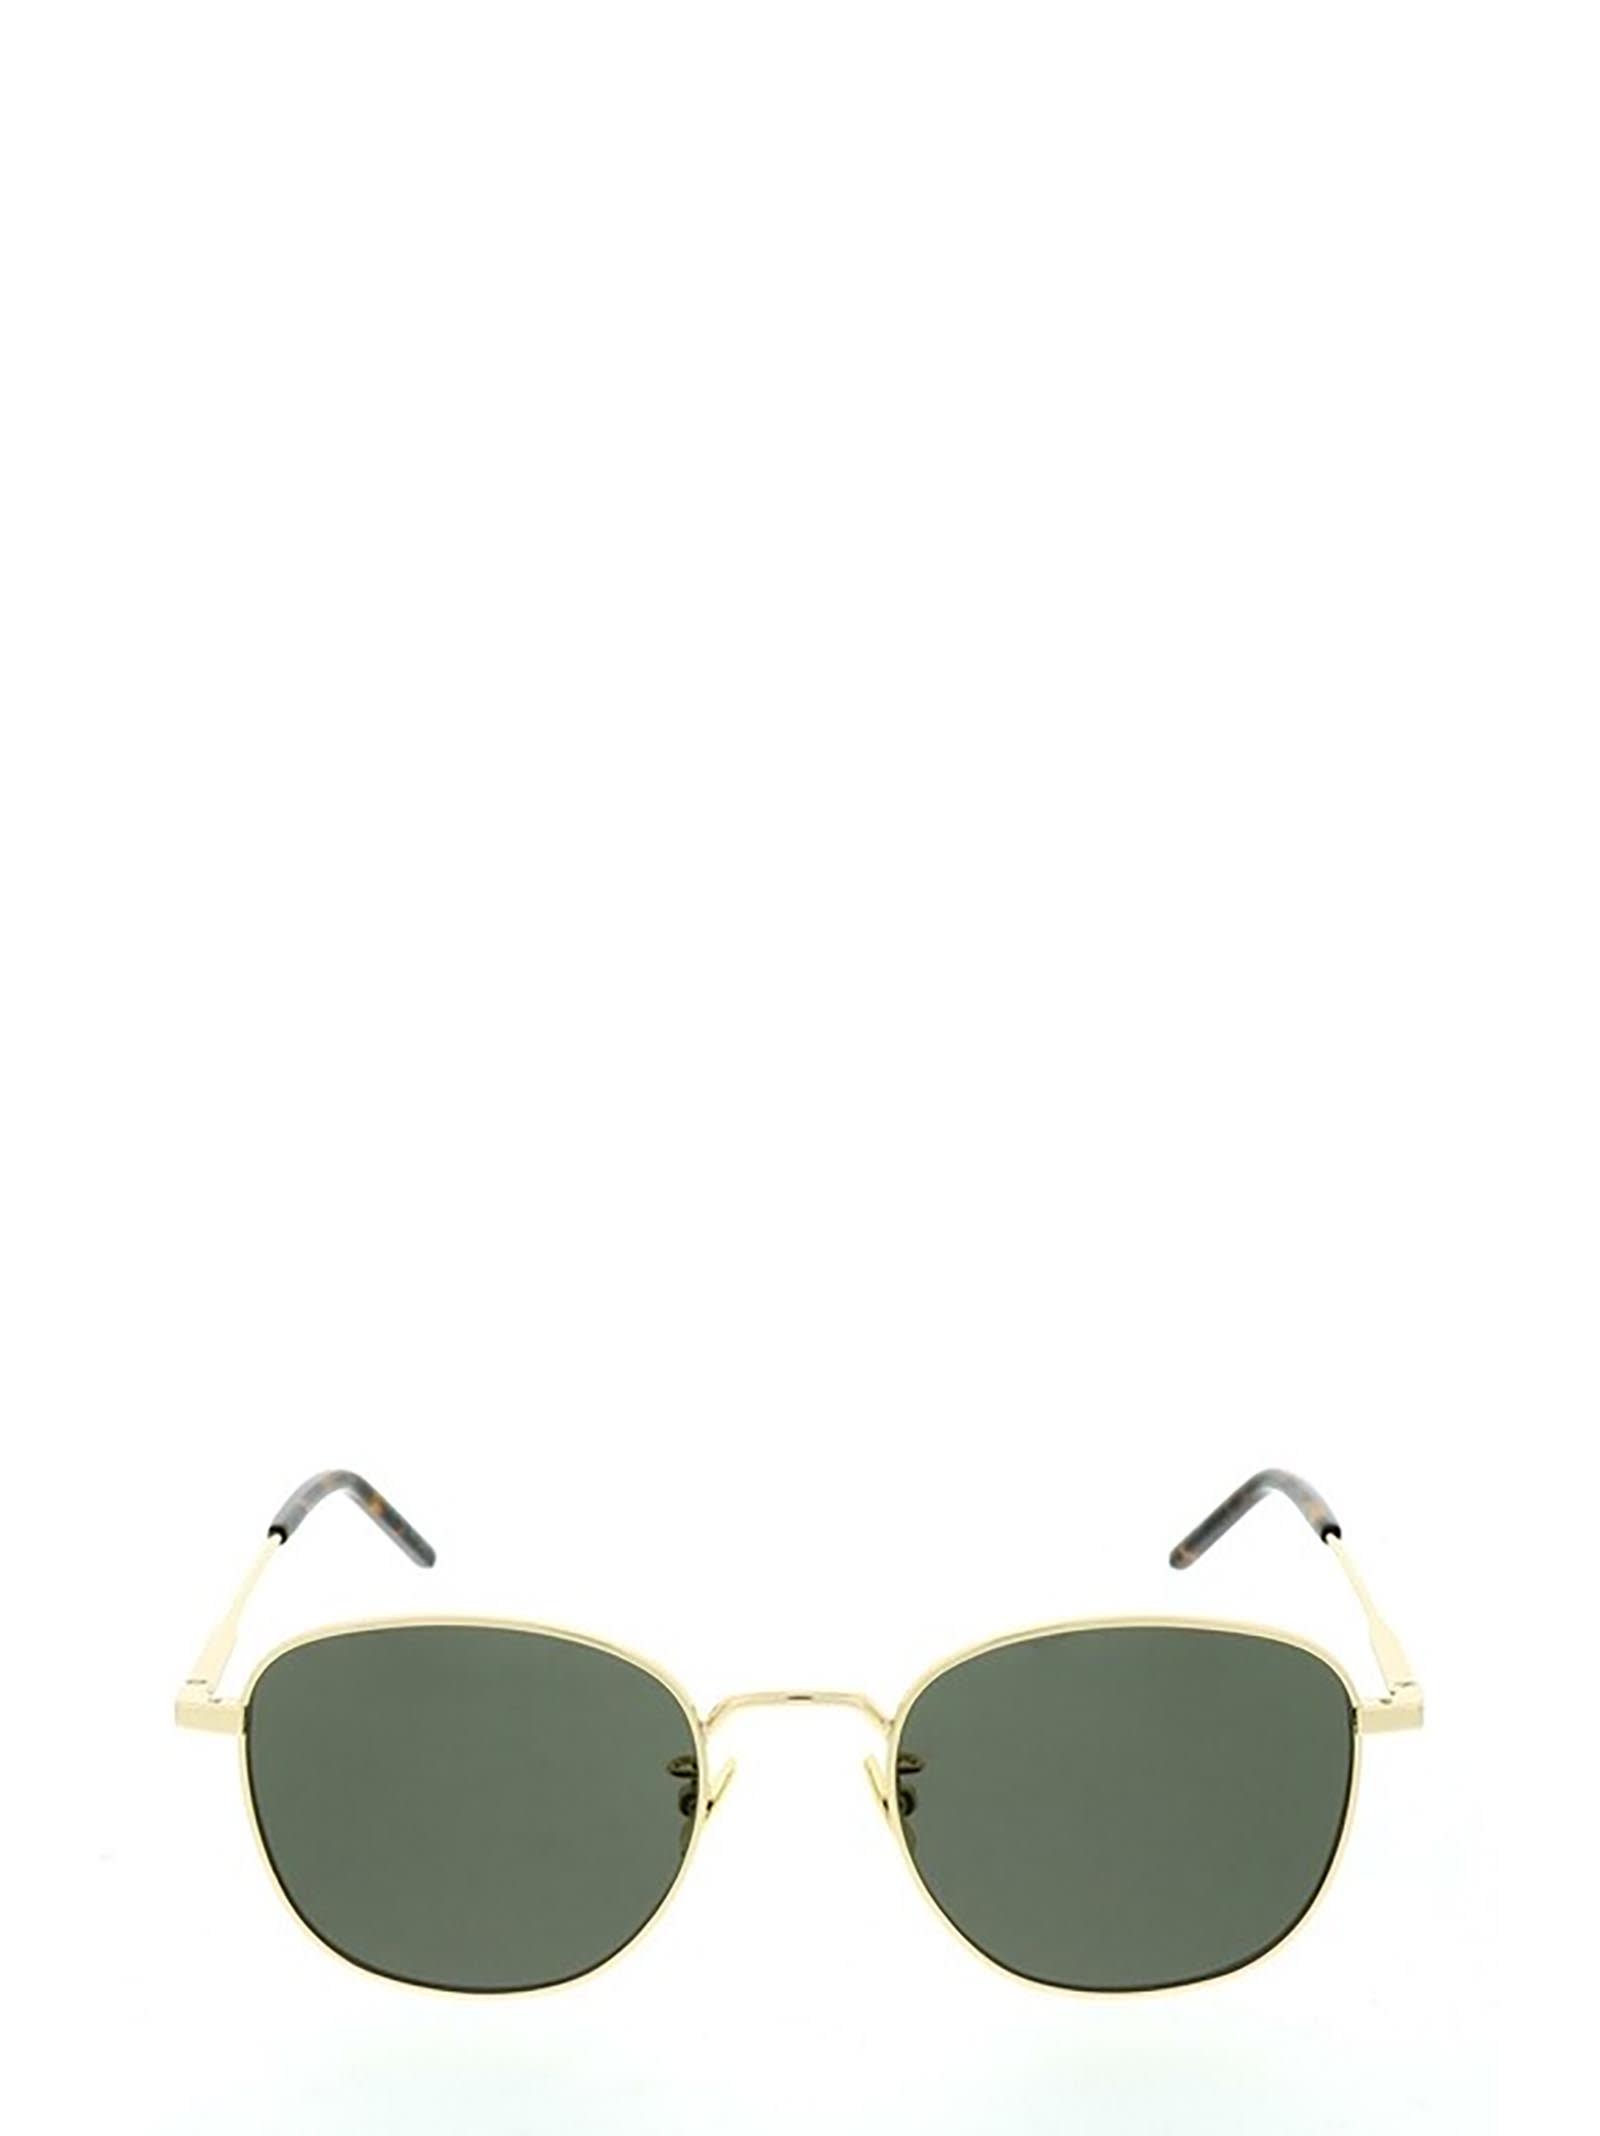 Saint Laurent Eyewear Saint Laurent Sl 299 Gold Sunglasses